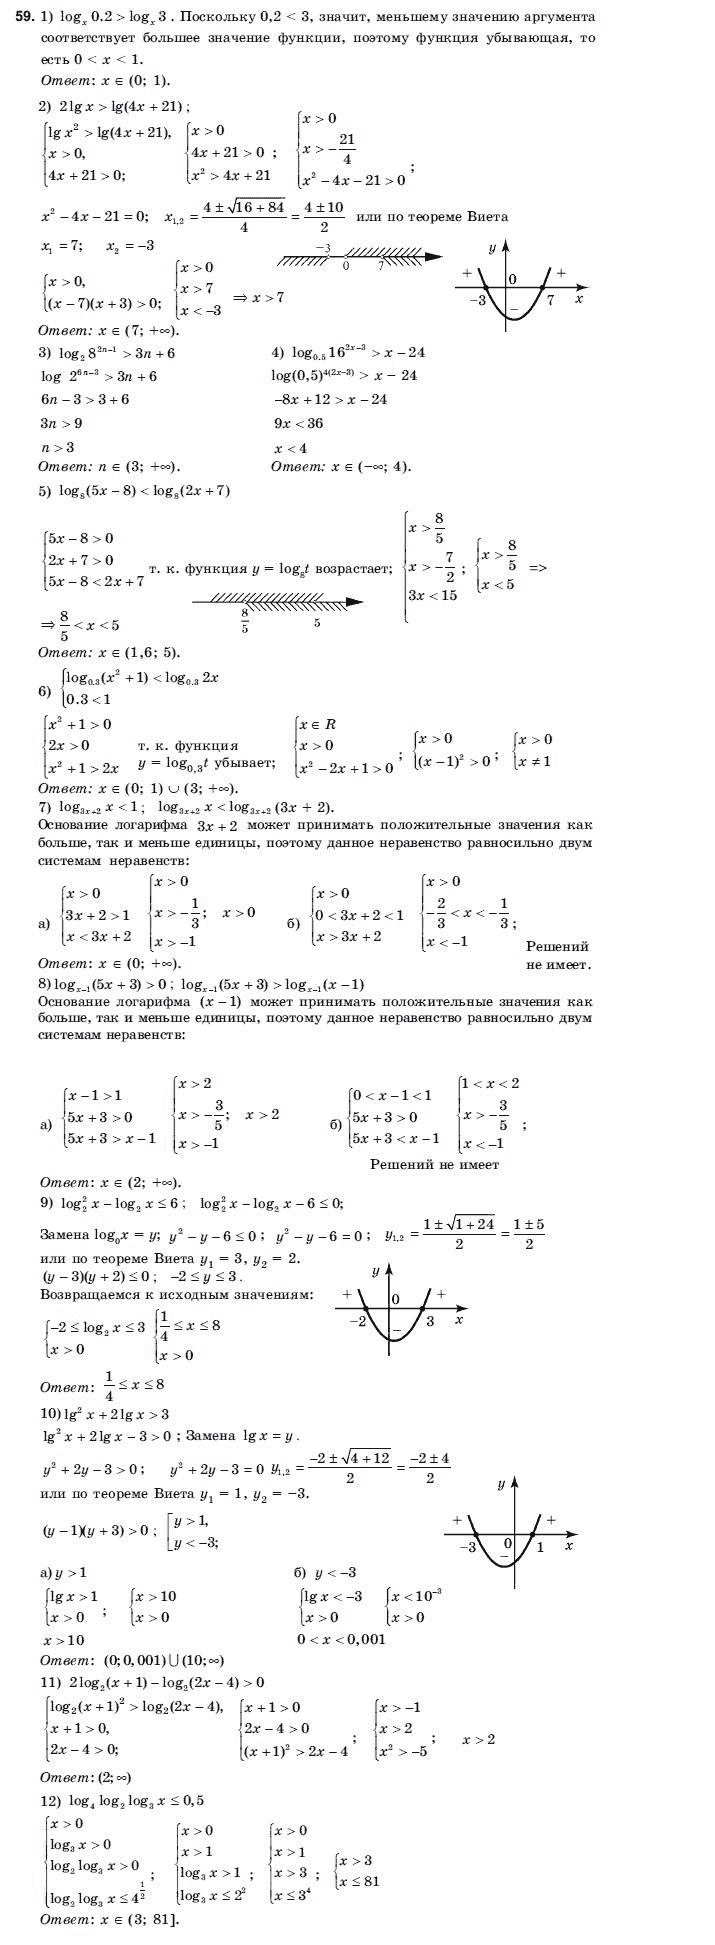 Алгебра і початки аналізу 10 клас Шкіль М.І., Слєпкань З.І., Дубинчук О.С. Задание 59